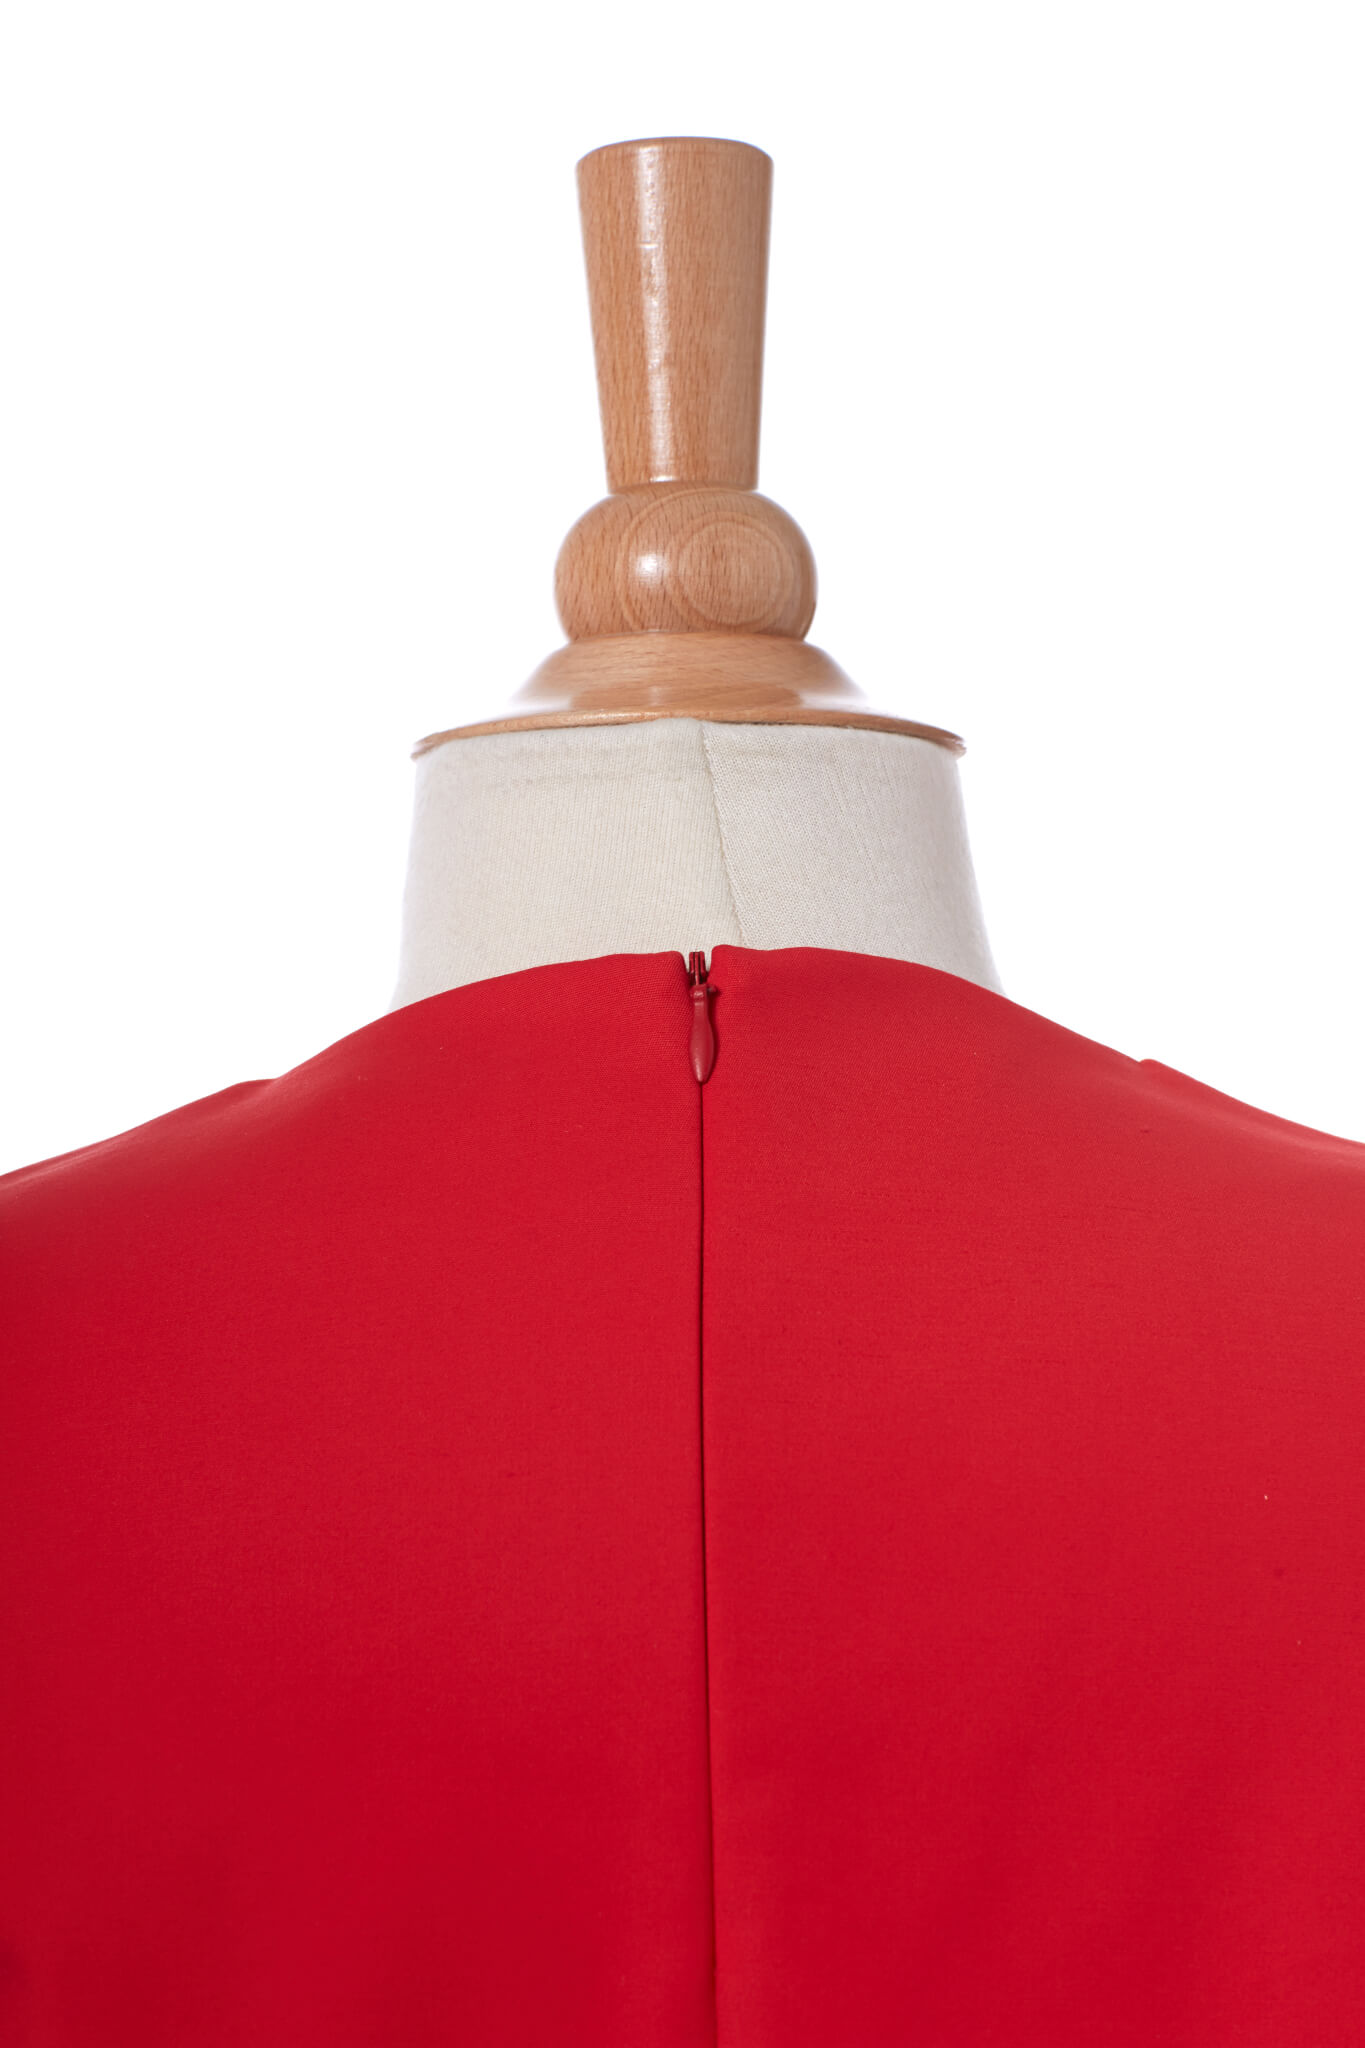 Jaya - Straight Dress with Three-Quarter Sleeves - Fiery Red